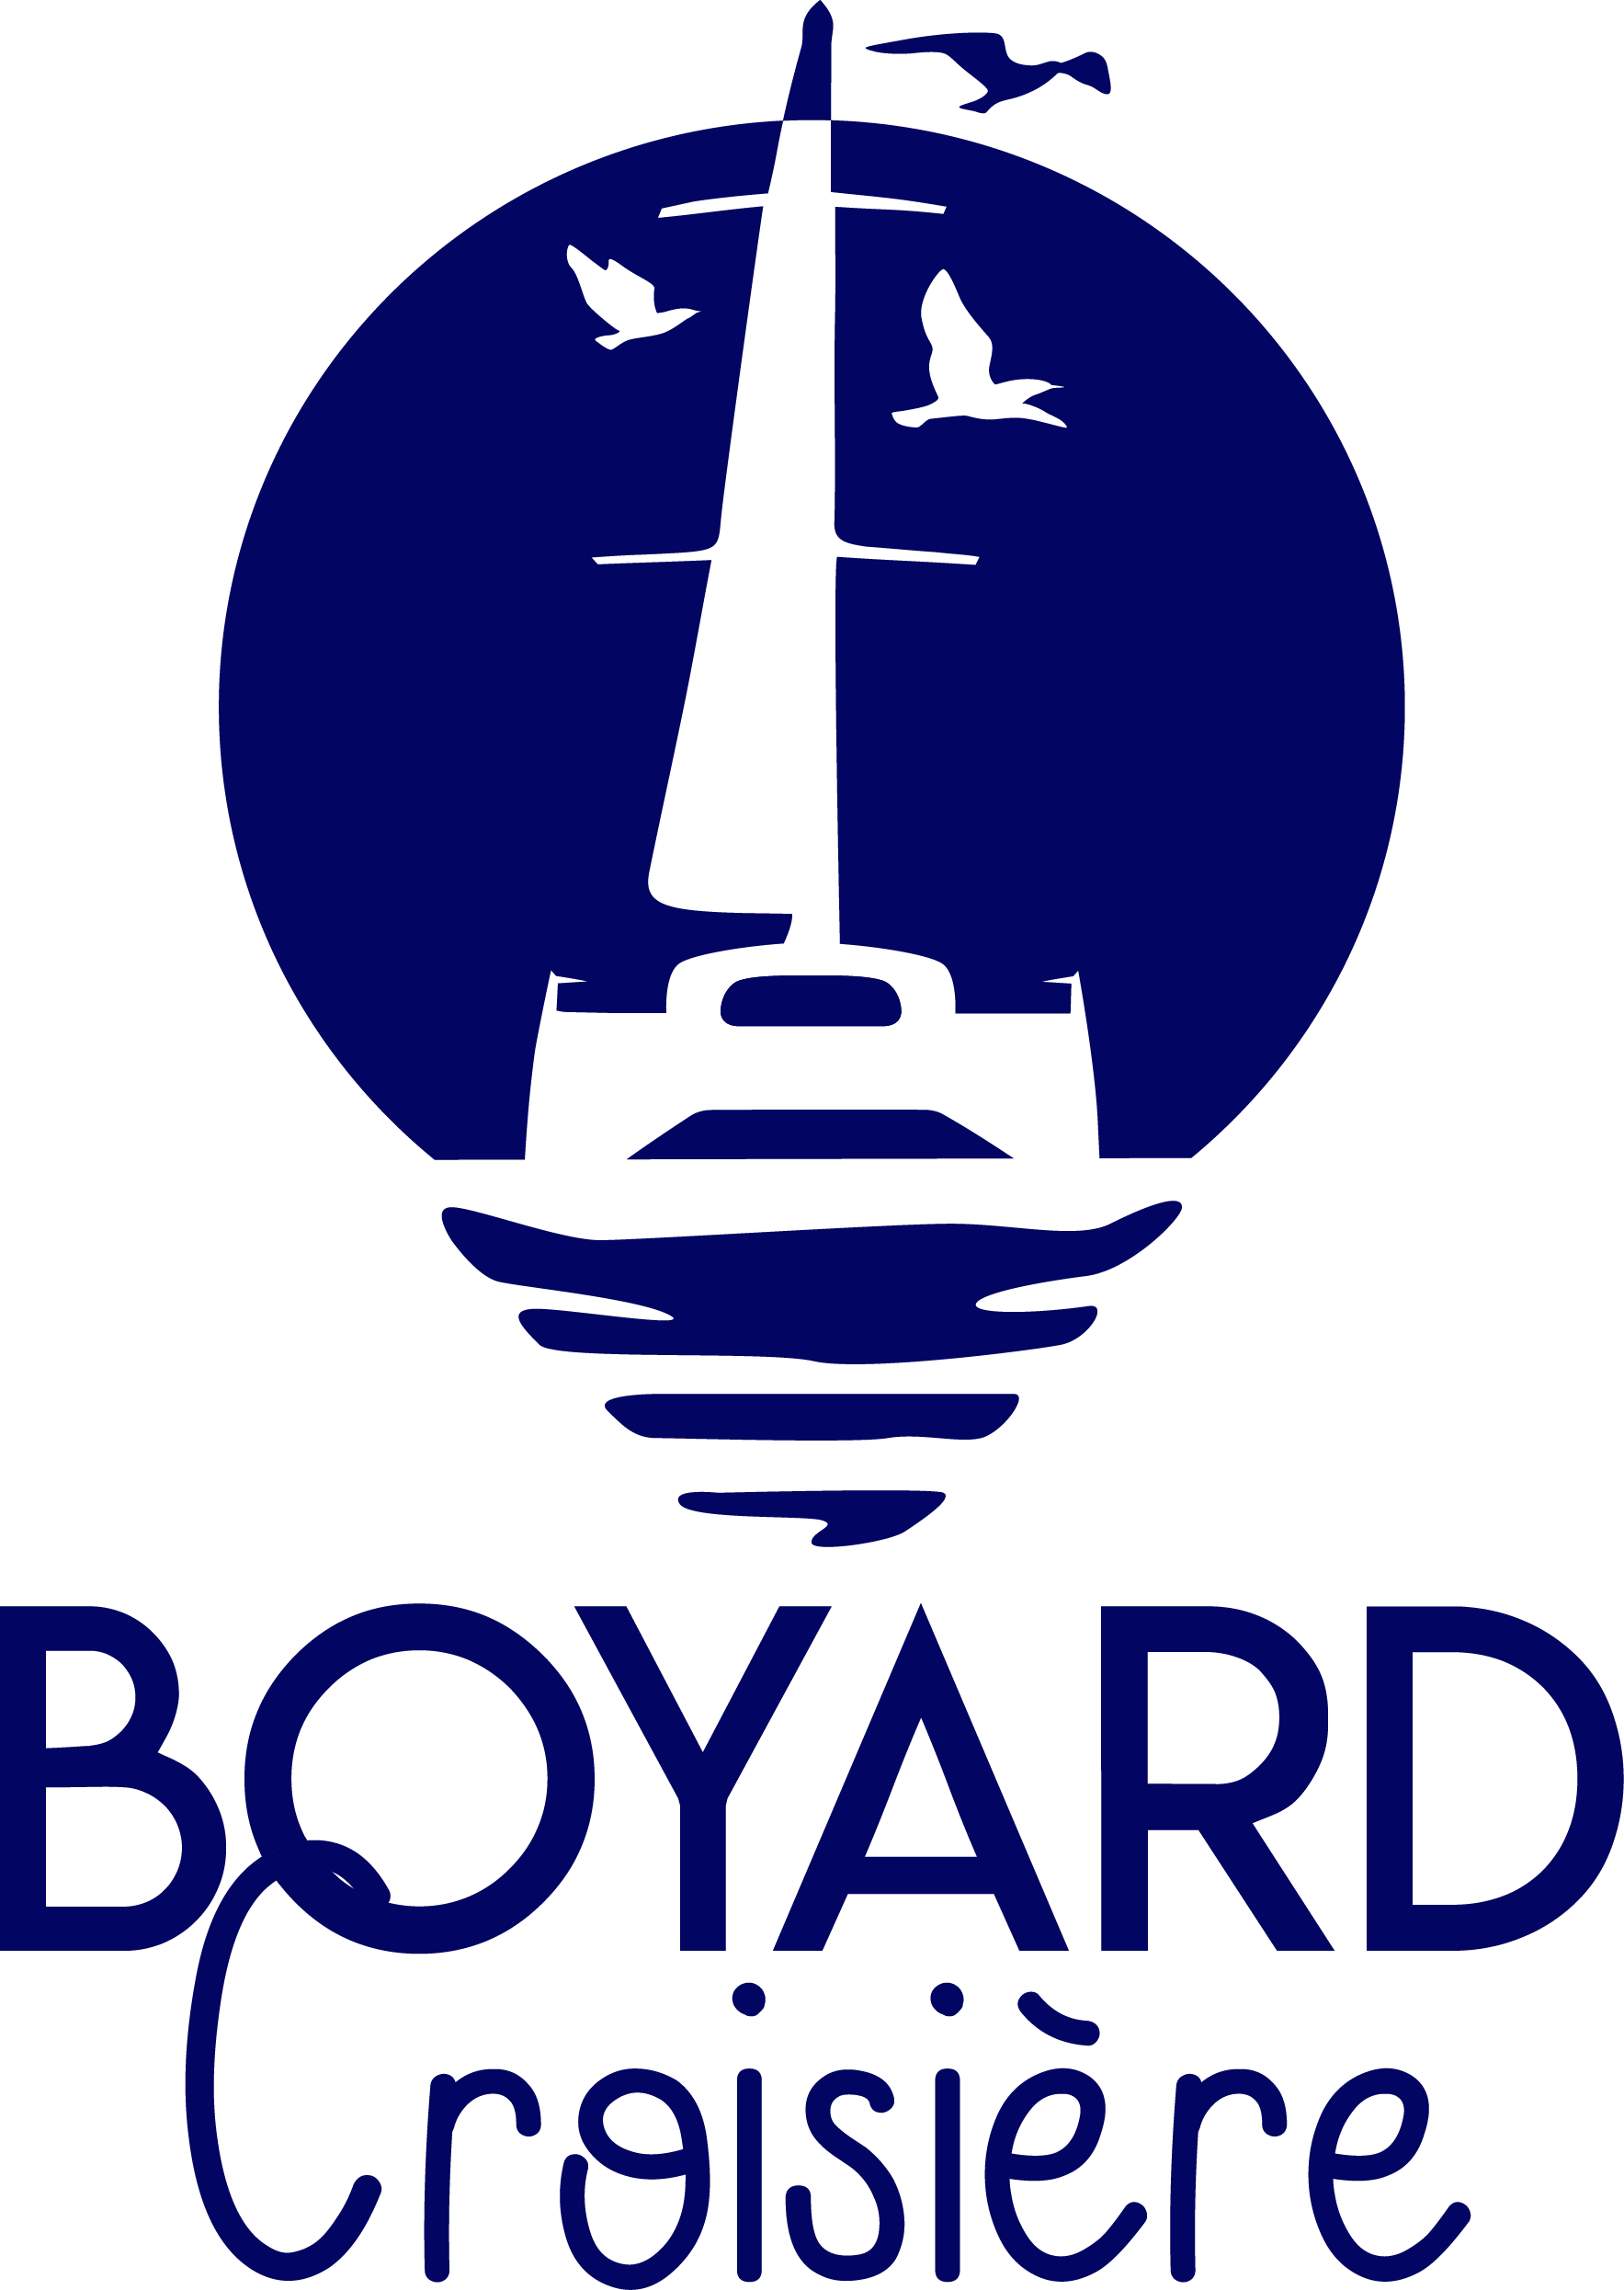 Schionning Designs Boyard Croisiere Boatbuilder La Rochelle France